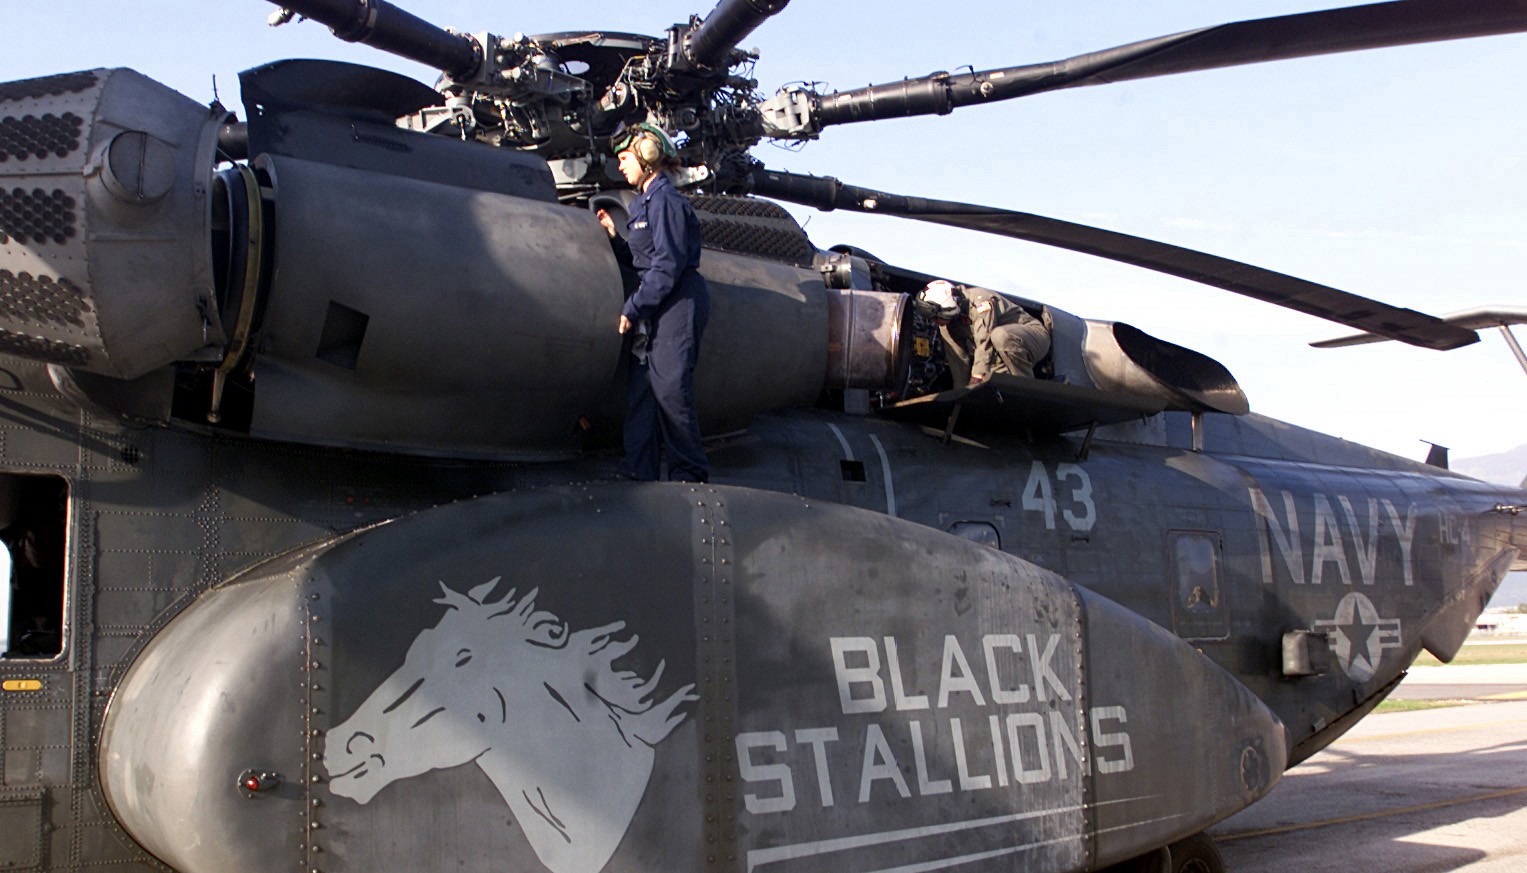 hc-4 black stallions helicopter combat support squadron mh-53e sea dragon 53